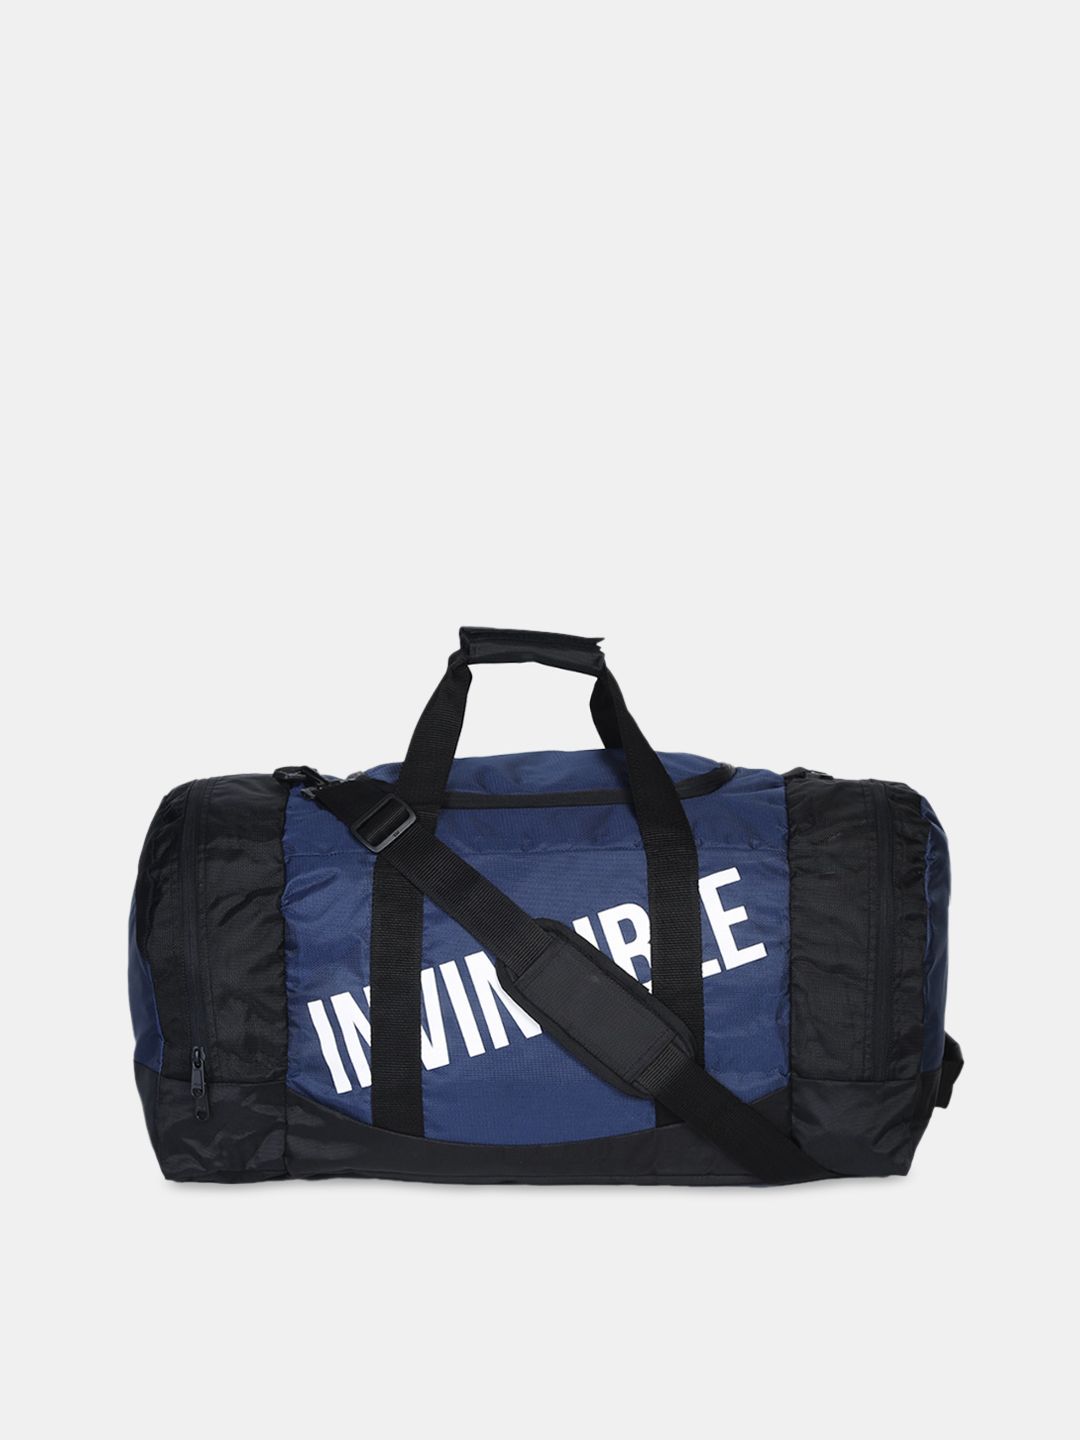 Invincible Navy Blue & Black Printed Duffel Bag Price in India